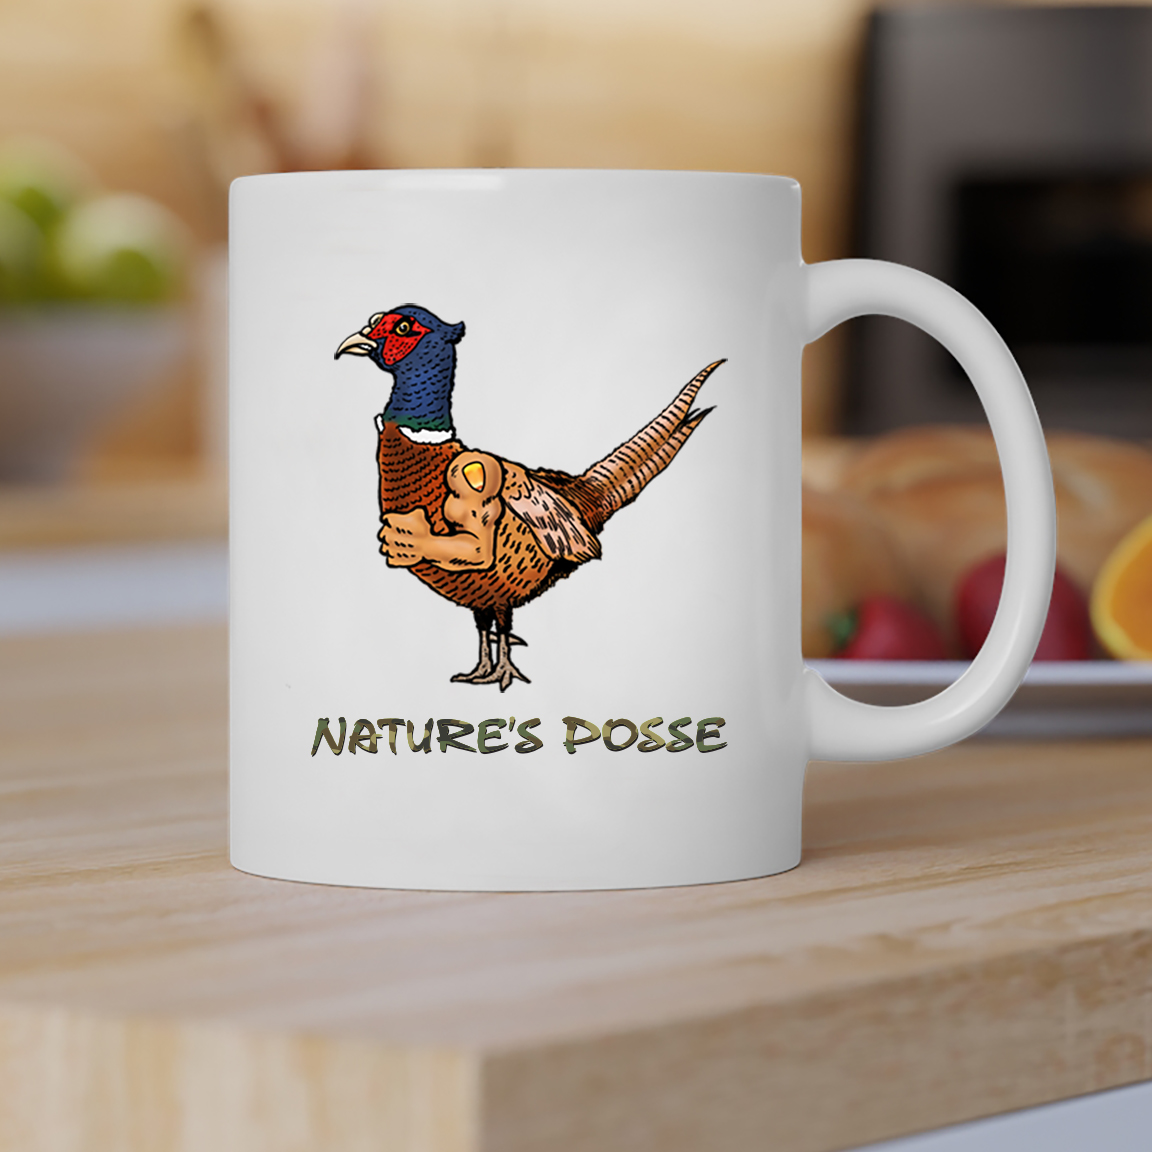 Phiesty Pheasant Ceramic Coffe Mug